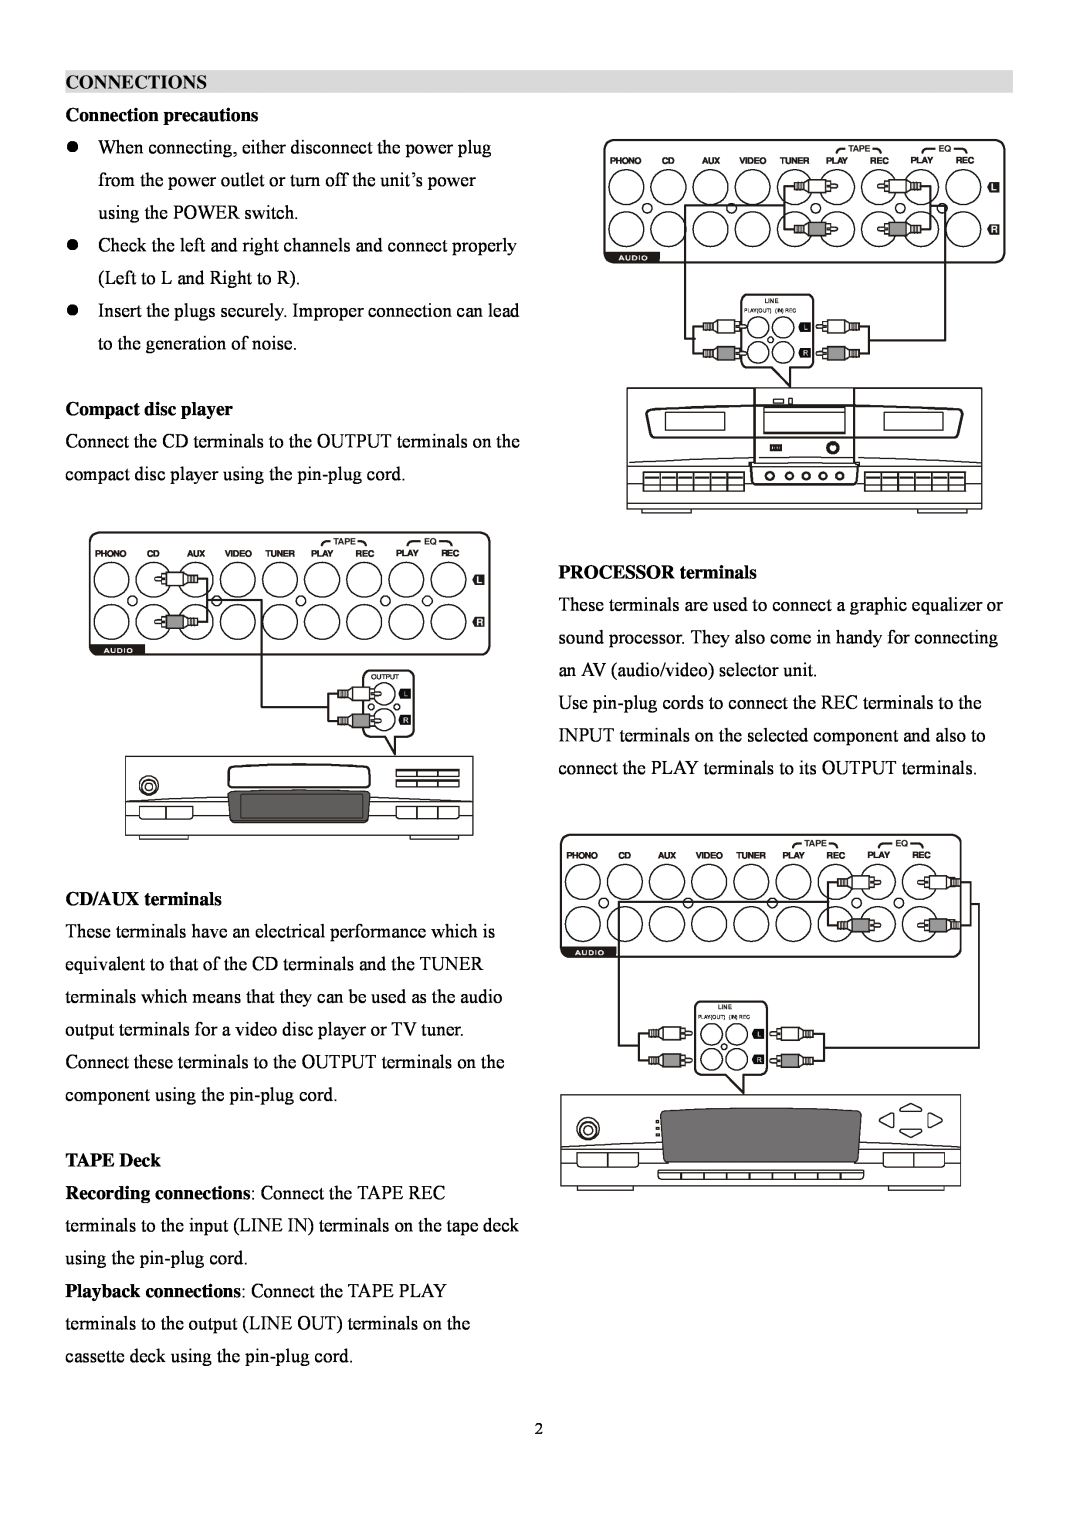 Pyramid Car Audio PR530A manual CONNECTIONS Connection precautions, Compact disc player, CD/AUX terminals, TAPE Deck 